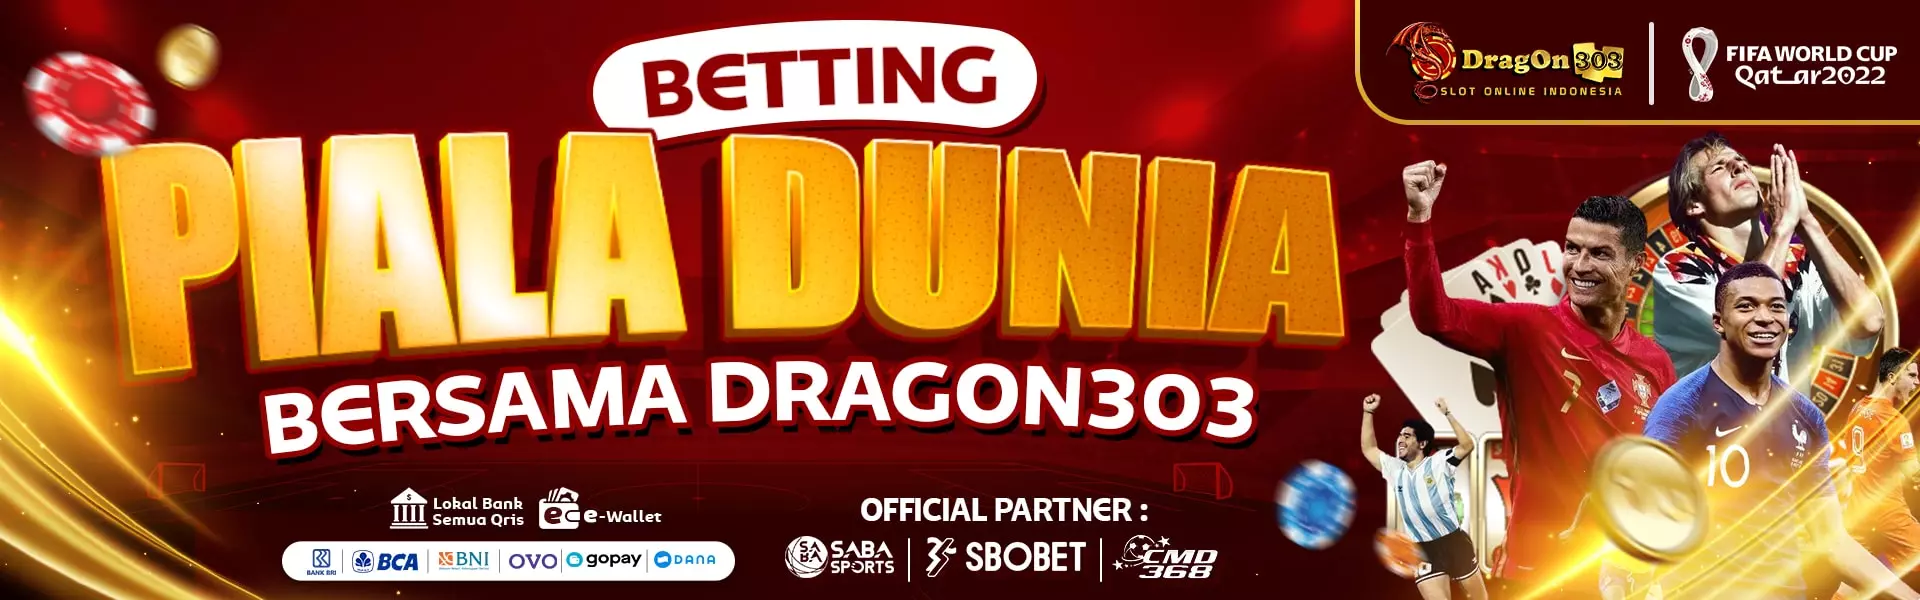 Dragon303 WorldCup2022 Qatar